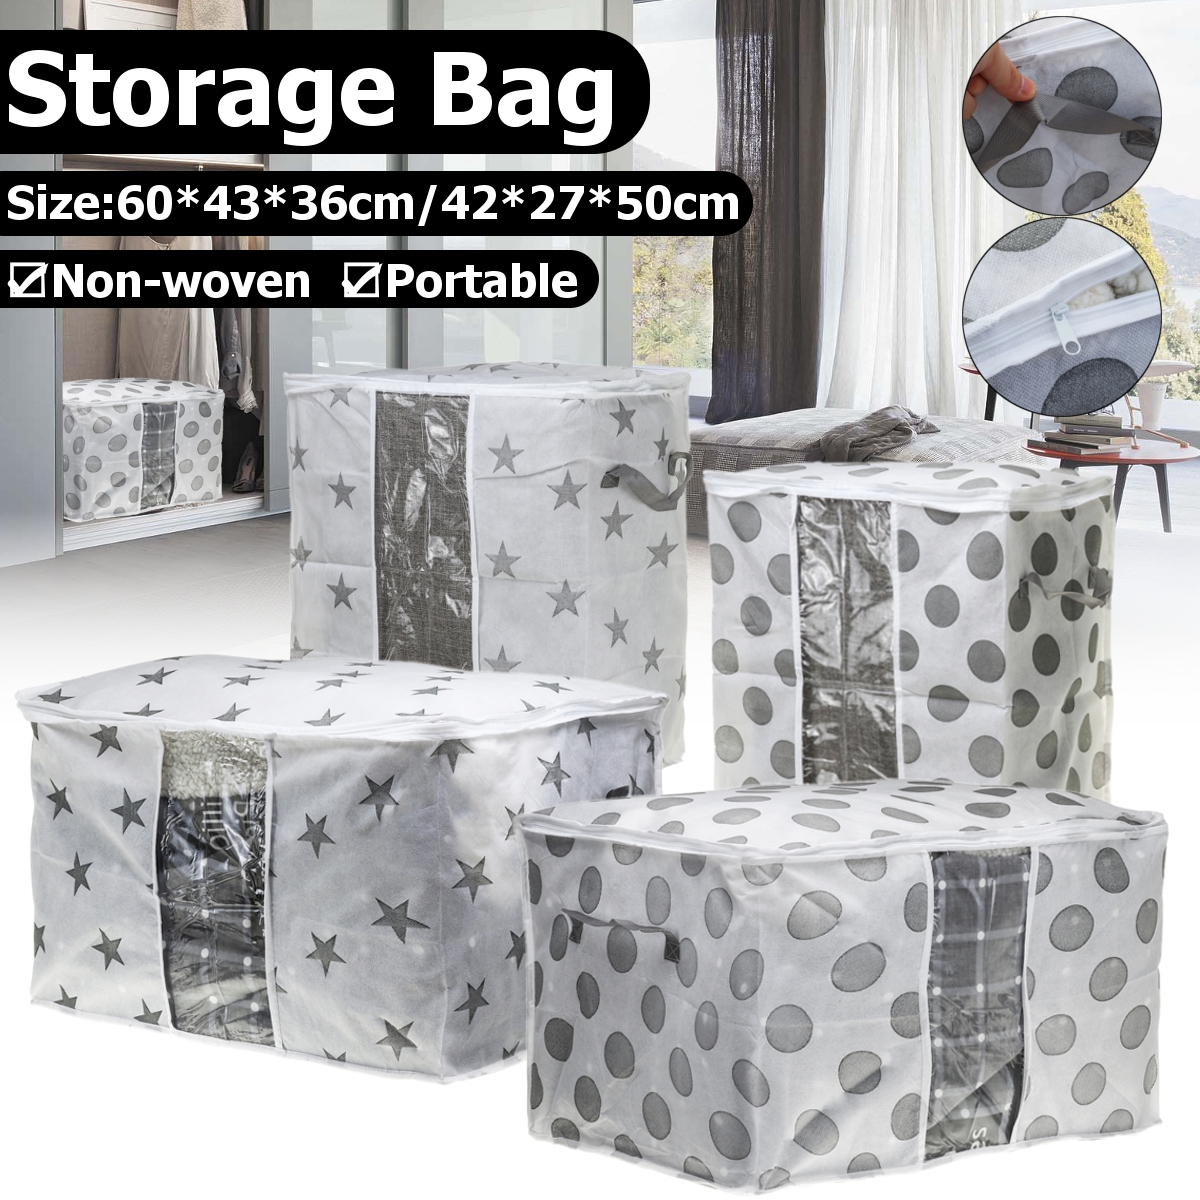 Portable-Non-woven-Storage-Bag-Clothes-Space-Saver-Quilt-Blanket-Organizer-1606430-1